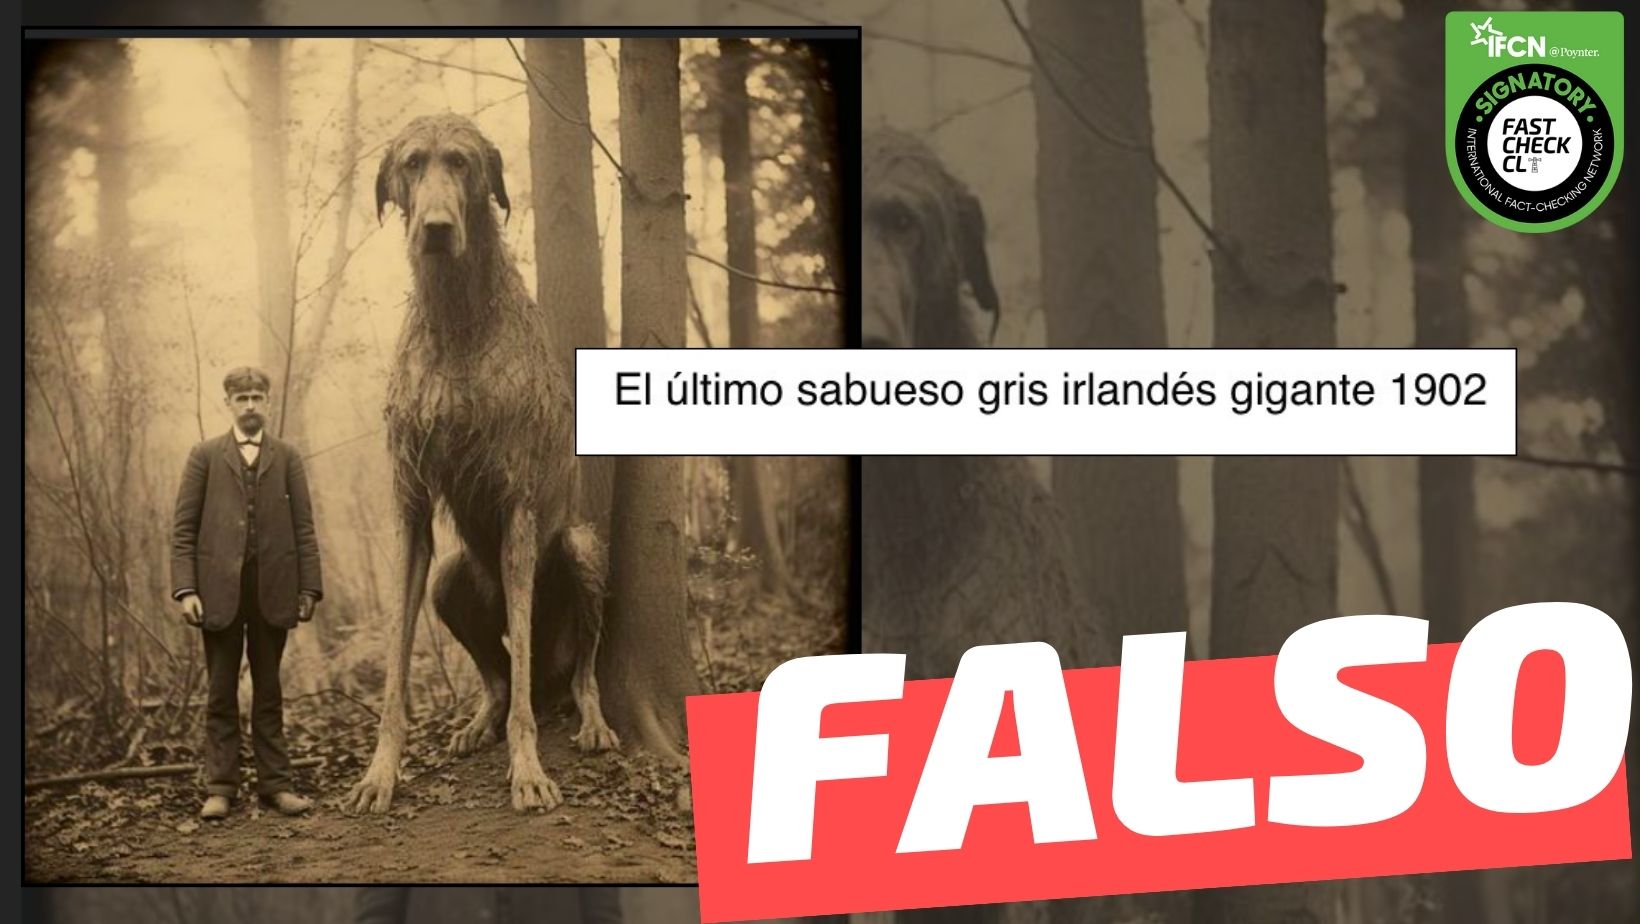 You are currently viewing (Imagen) “El último sabueso gris irlandés gigante 1902”: #Falso